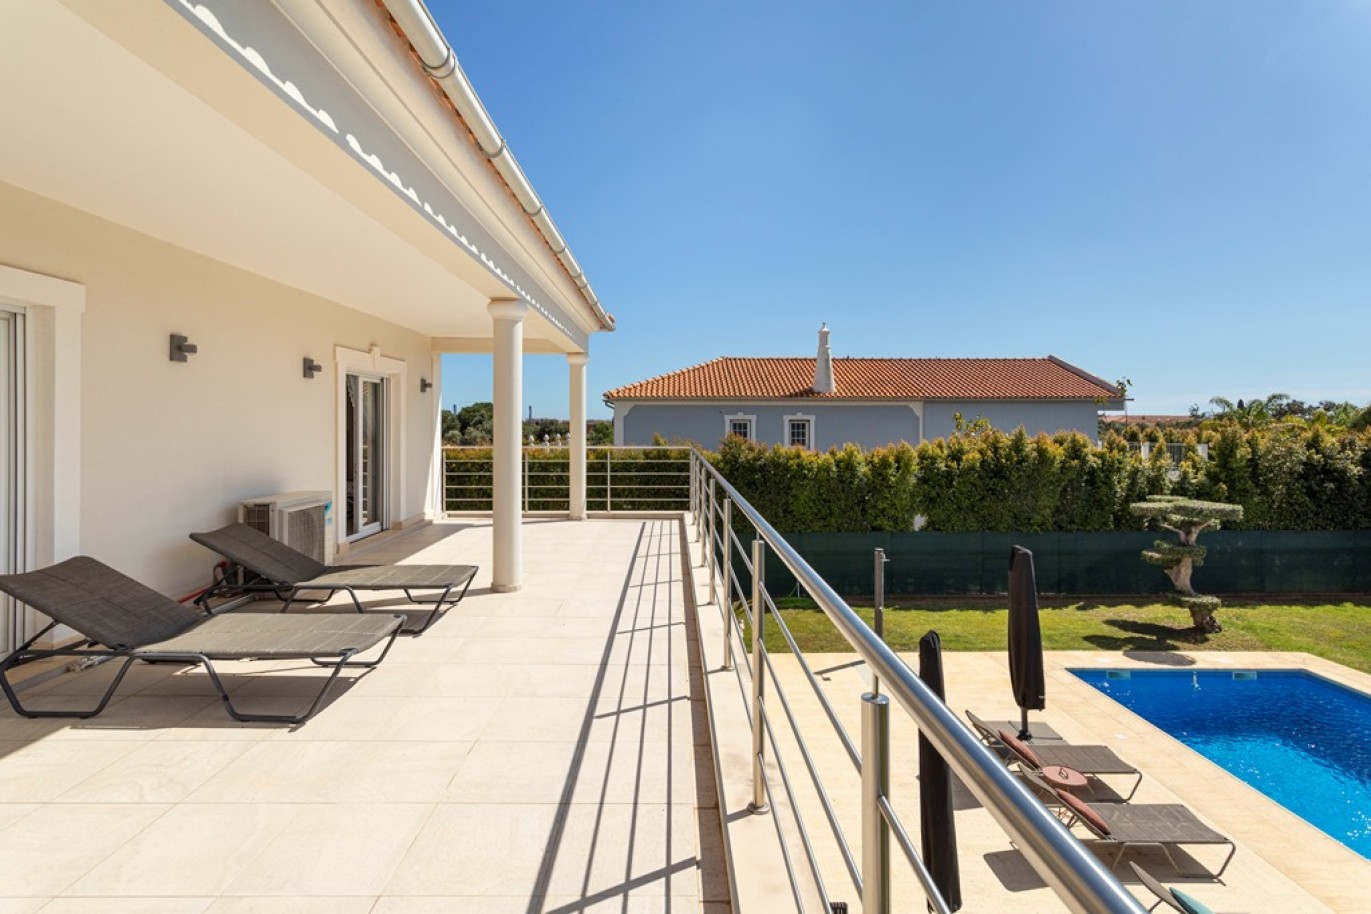 Moradia V5 com piscina, para venda em Vilamoura, Algarve_264474